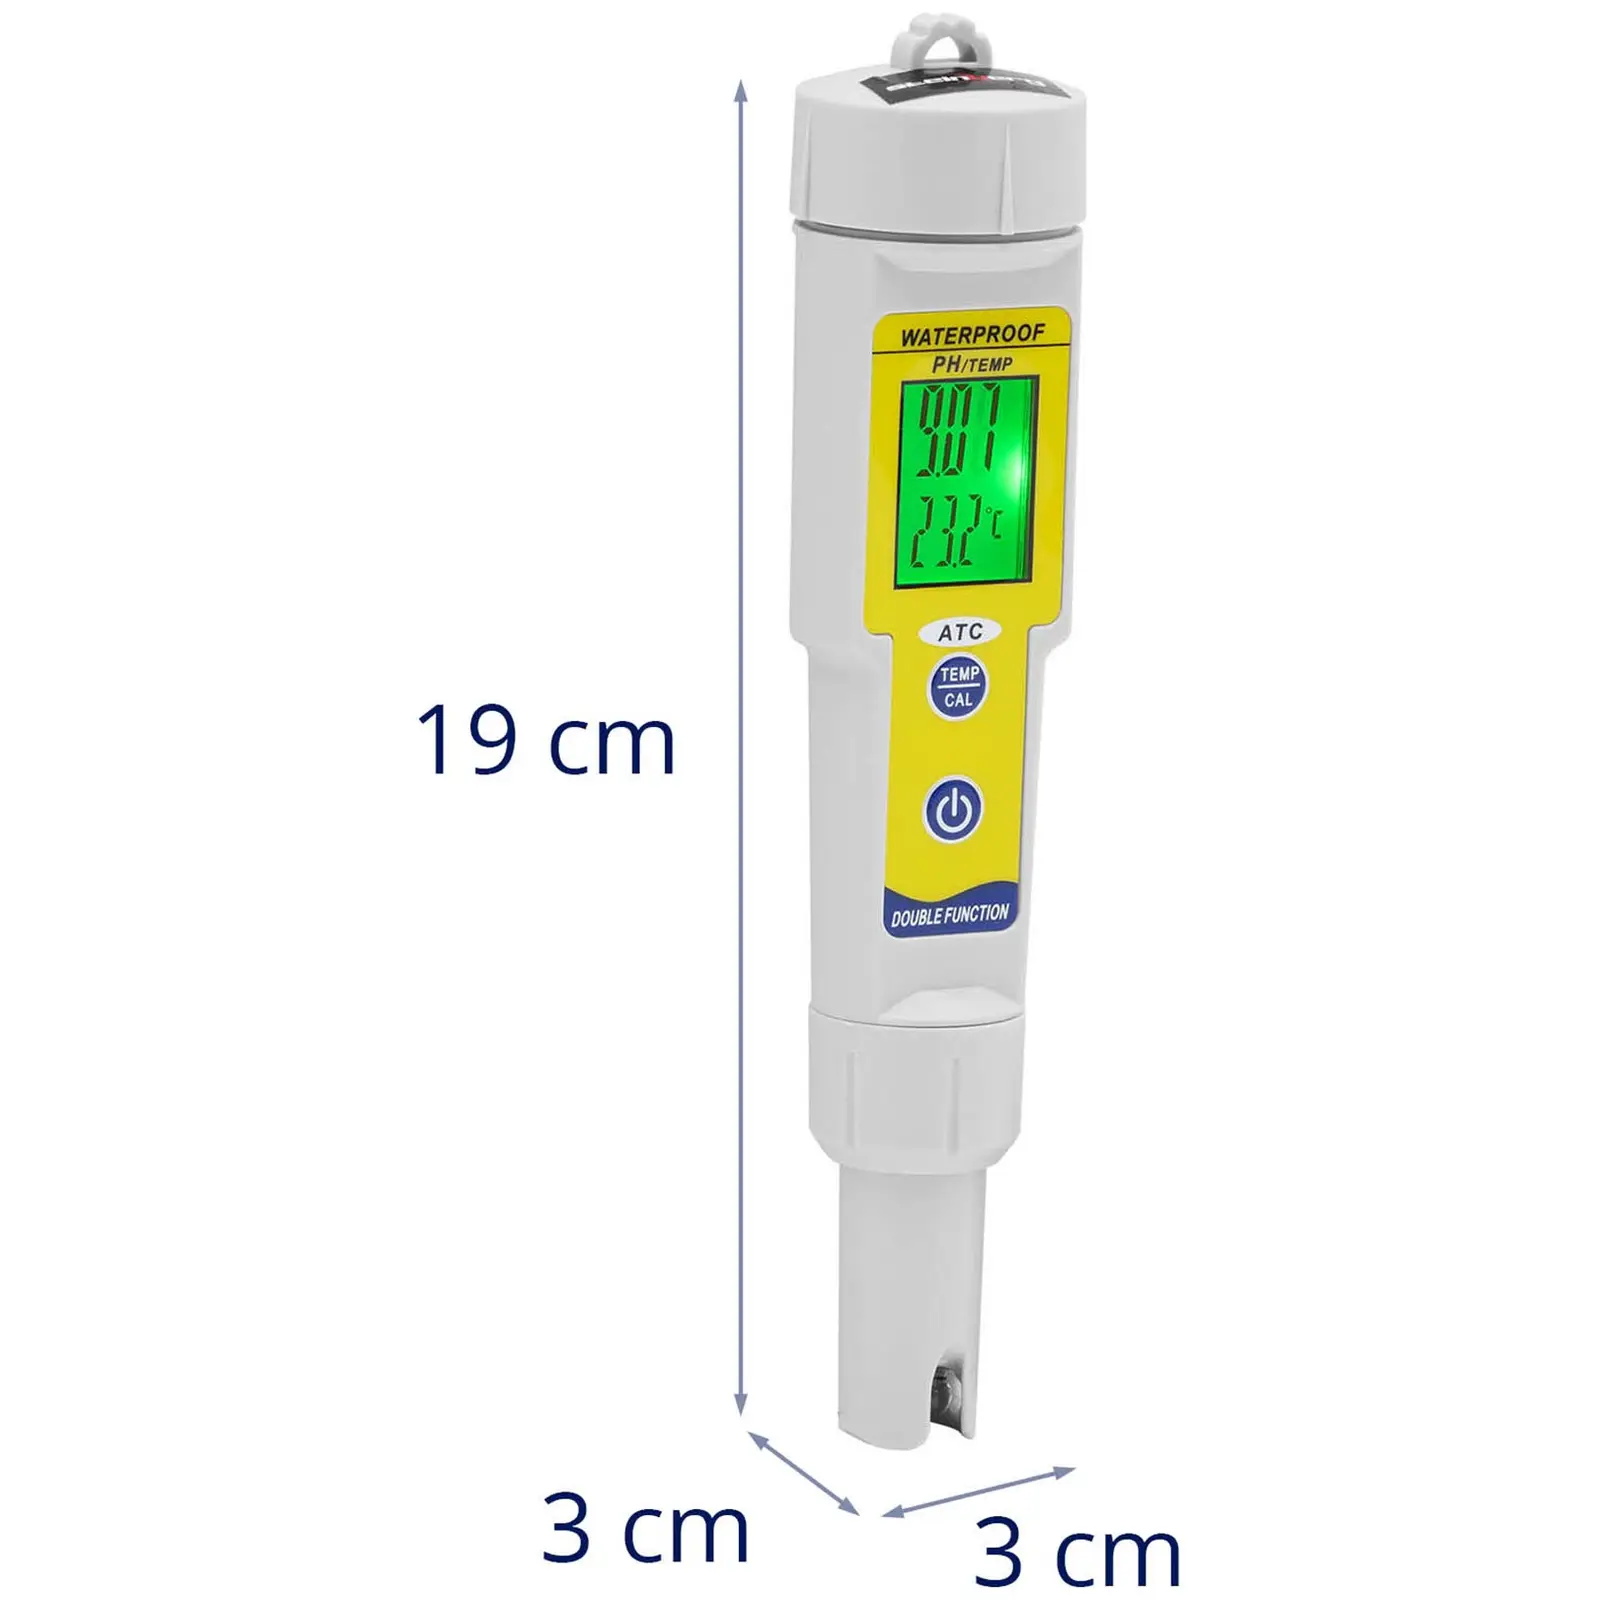 pH-метър с измерване на температурата - LCD - 0-14 pH / Температура 0 - 50 °C